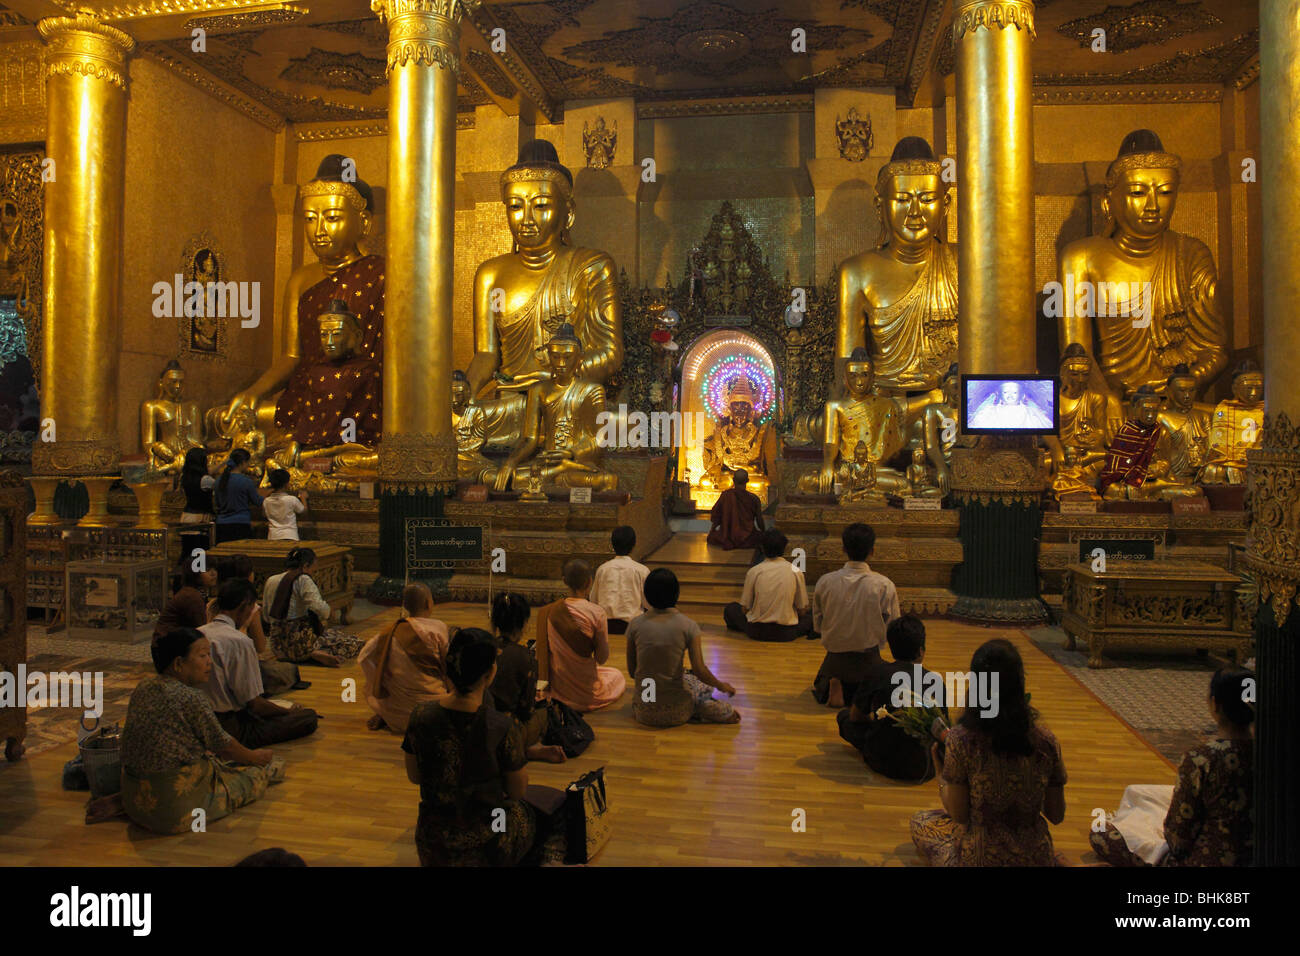 Myanmar Burma Yangon Rangoon Shwedagon Pagoda landmark historic religous buddhist monument Stock Photo